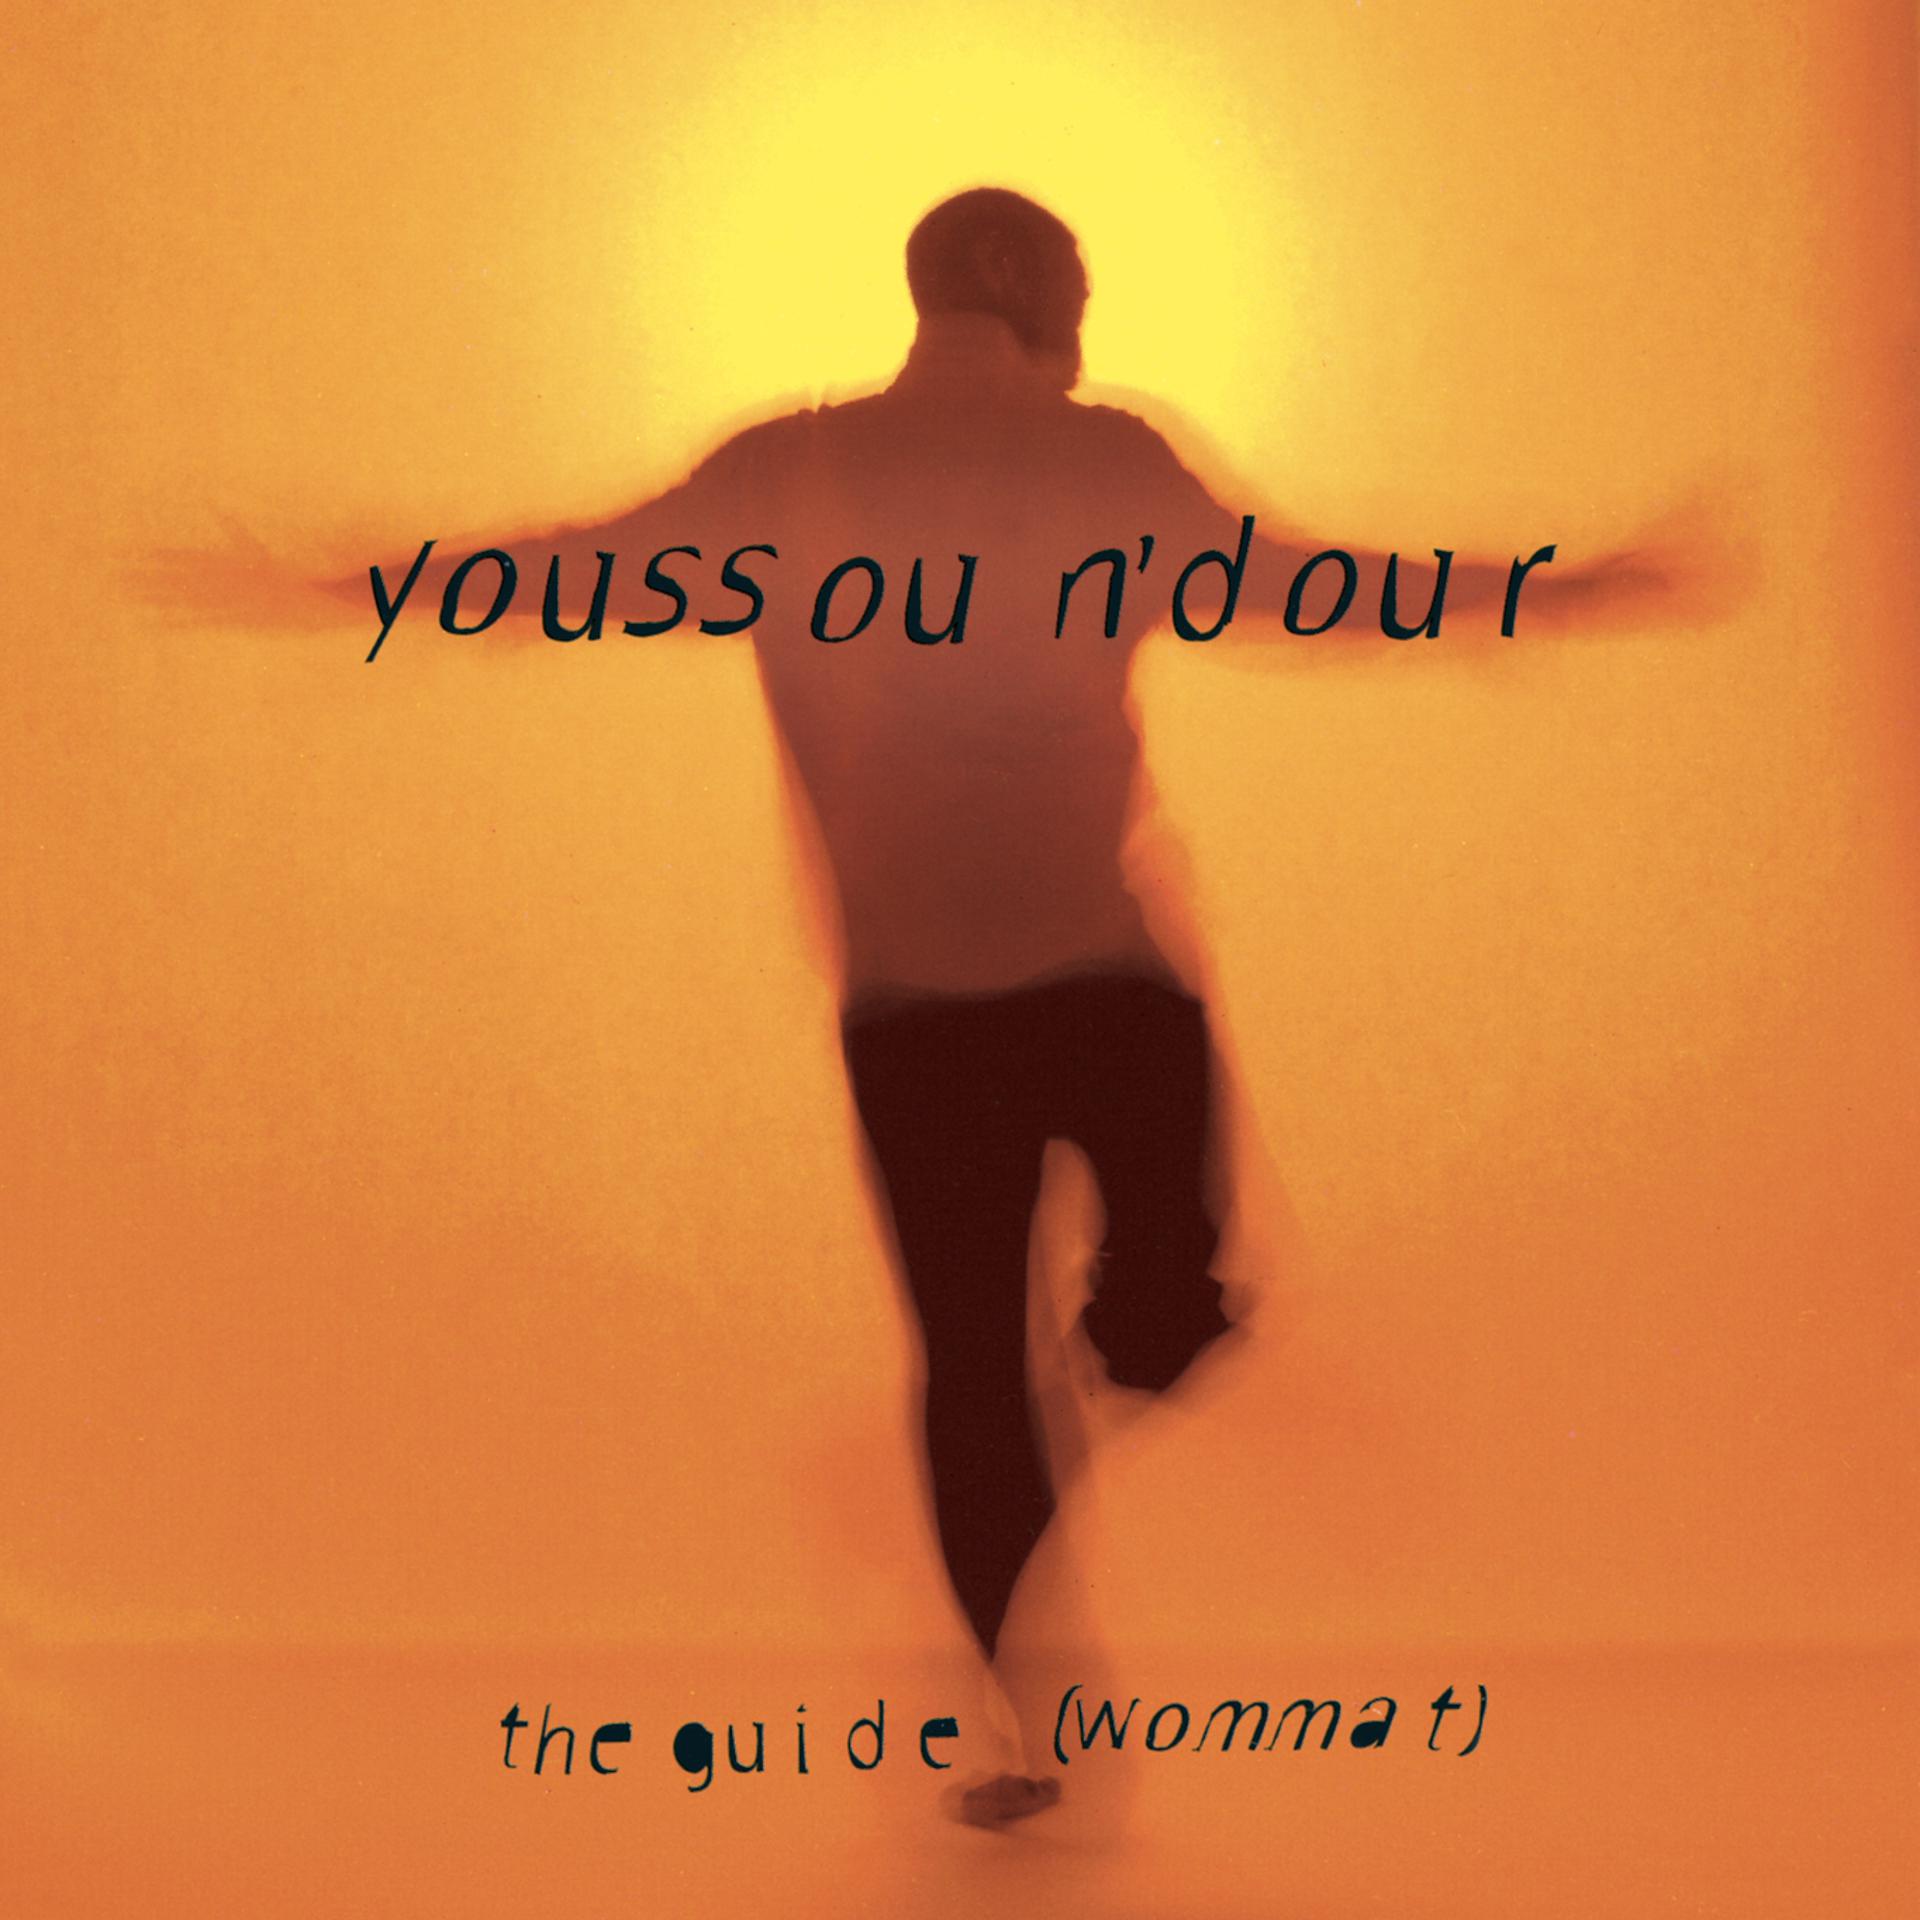 7 second neneh cherry youssou. Youssou n'Dour the Guide. Youssou n'Dour the Guide Wommat. Youssou n'Dour album the Guide. Youssou n'Dour фото.